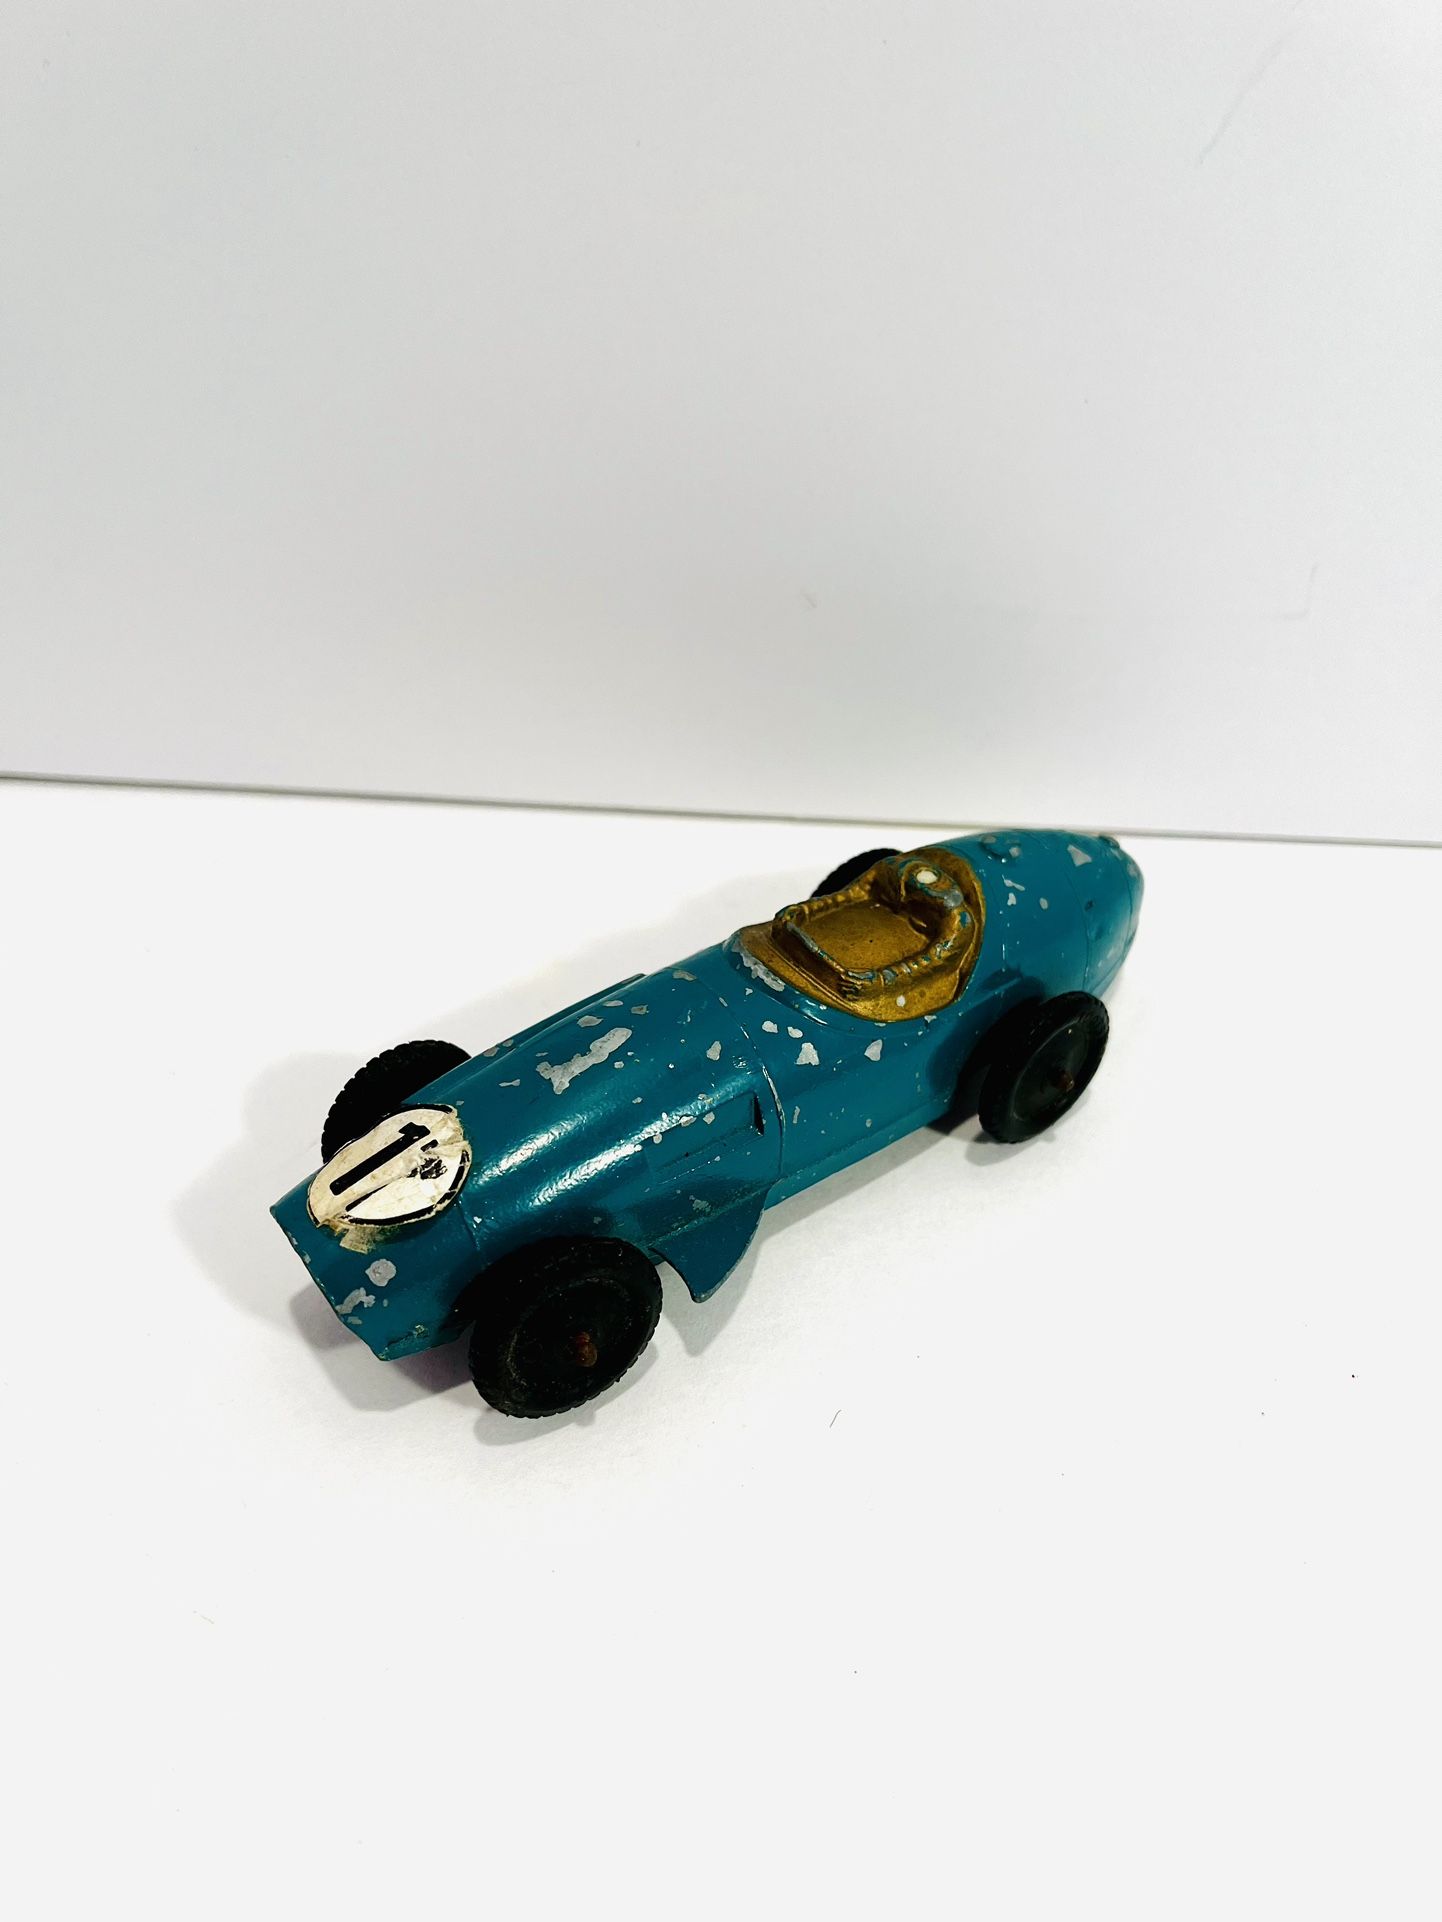 TootsieToy MASERATI Turquoise Car  No Racer Man 5" long Vintage